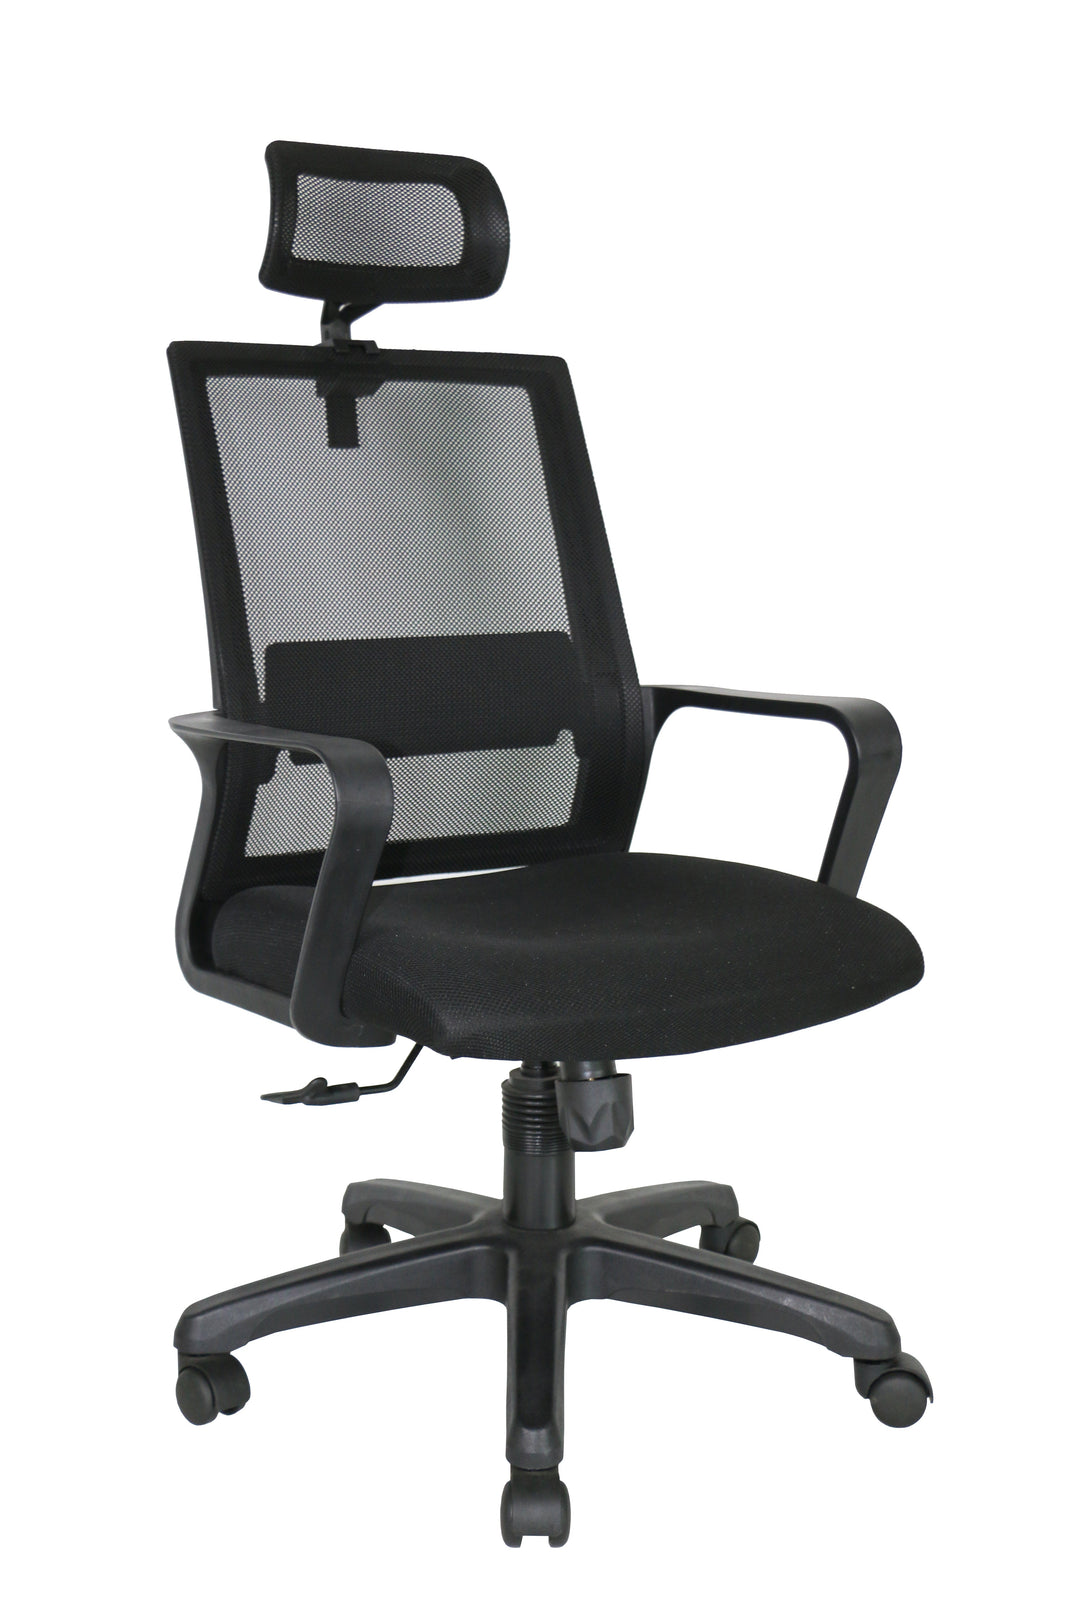 PLEXUS Mesh Office Chair